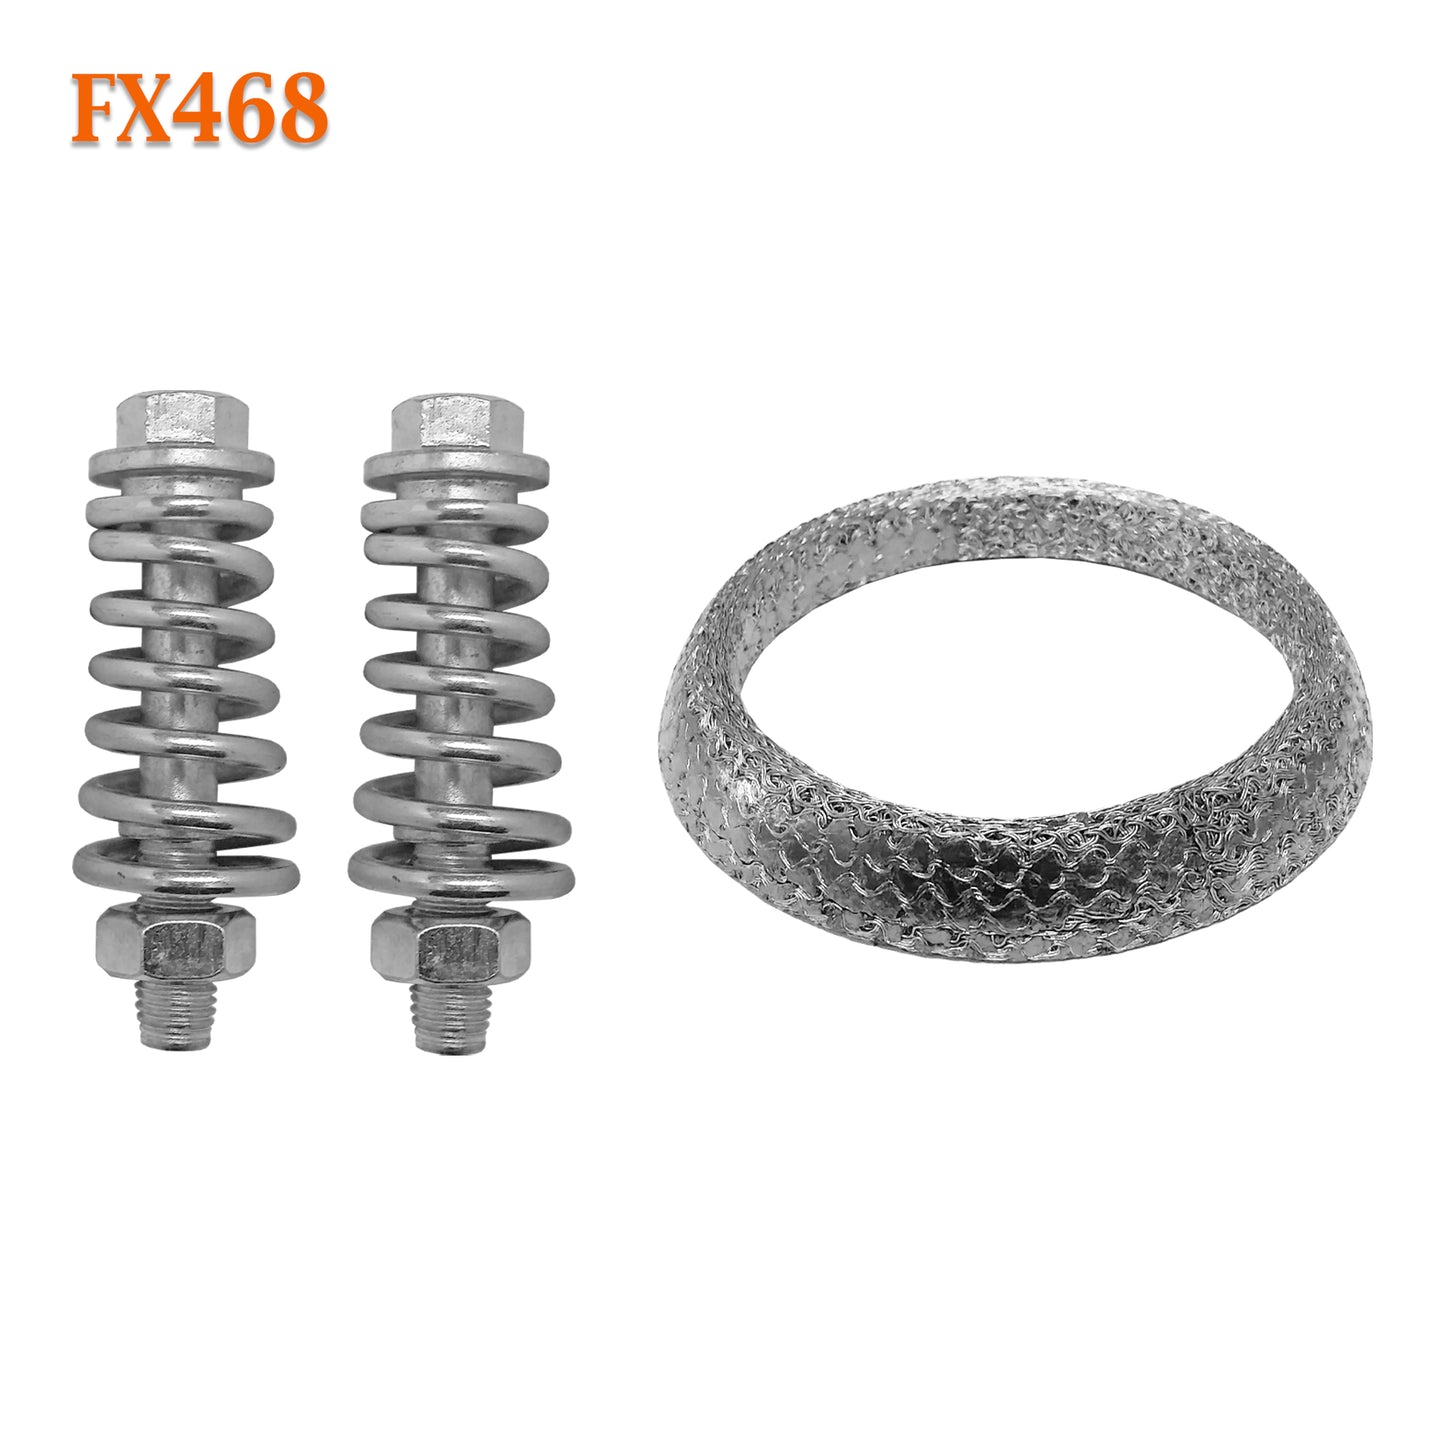 FX468 2 3/4" ID Exhaust Donut Gasket & Spring Bolts Stud Nut Hardware Repair Kit